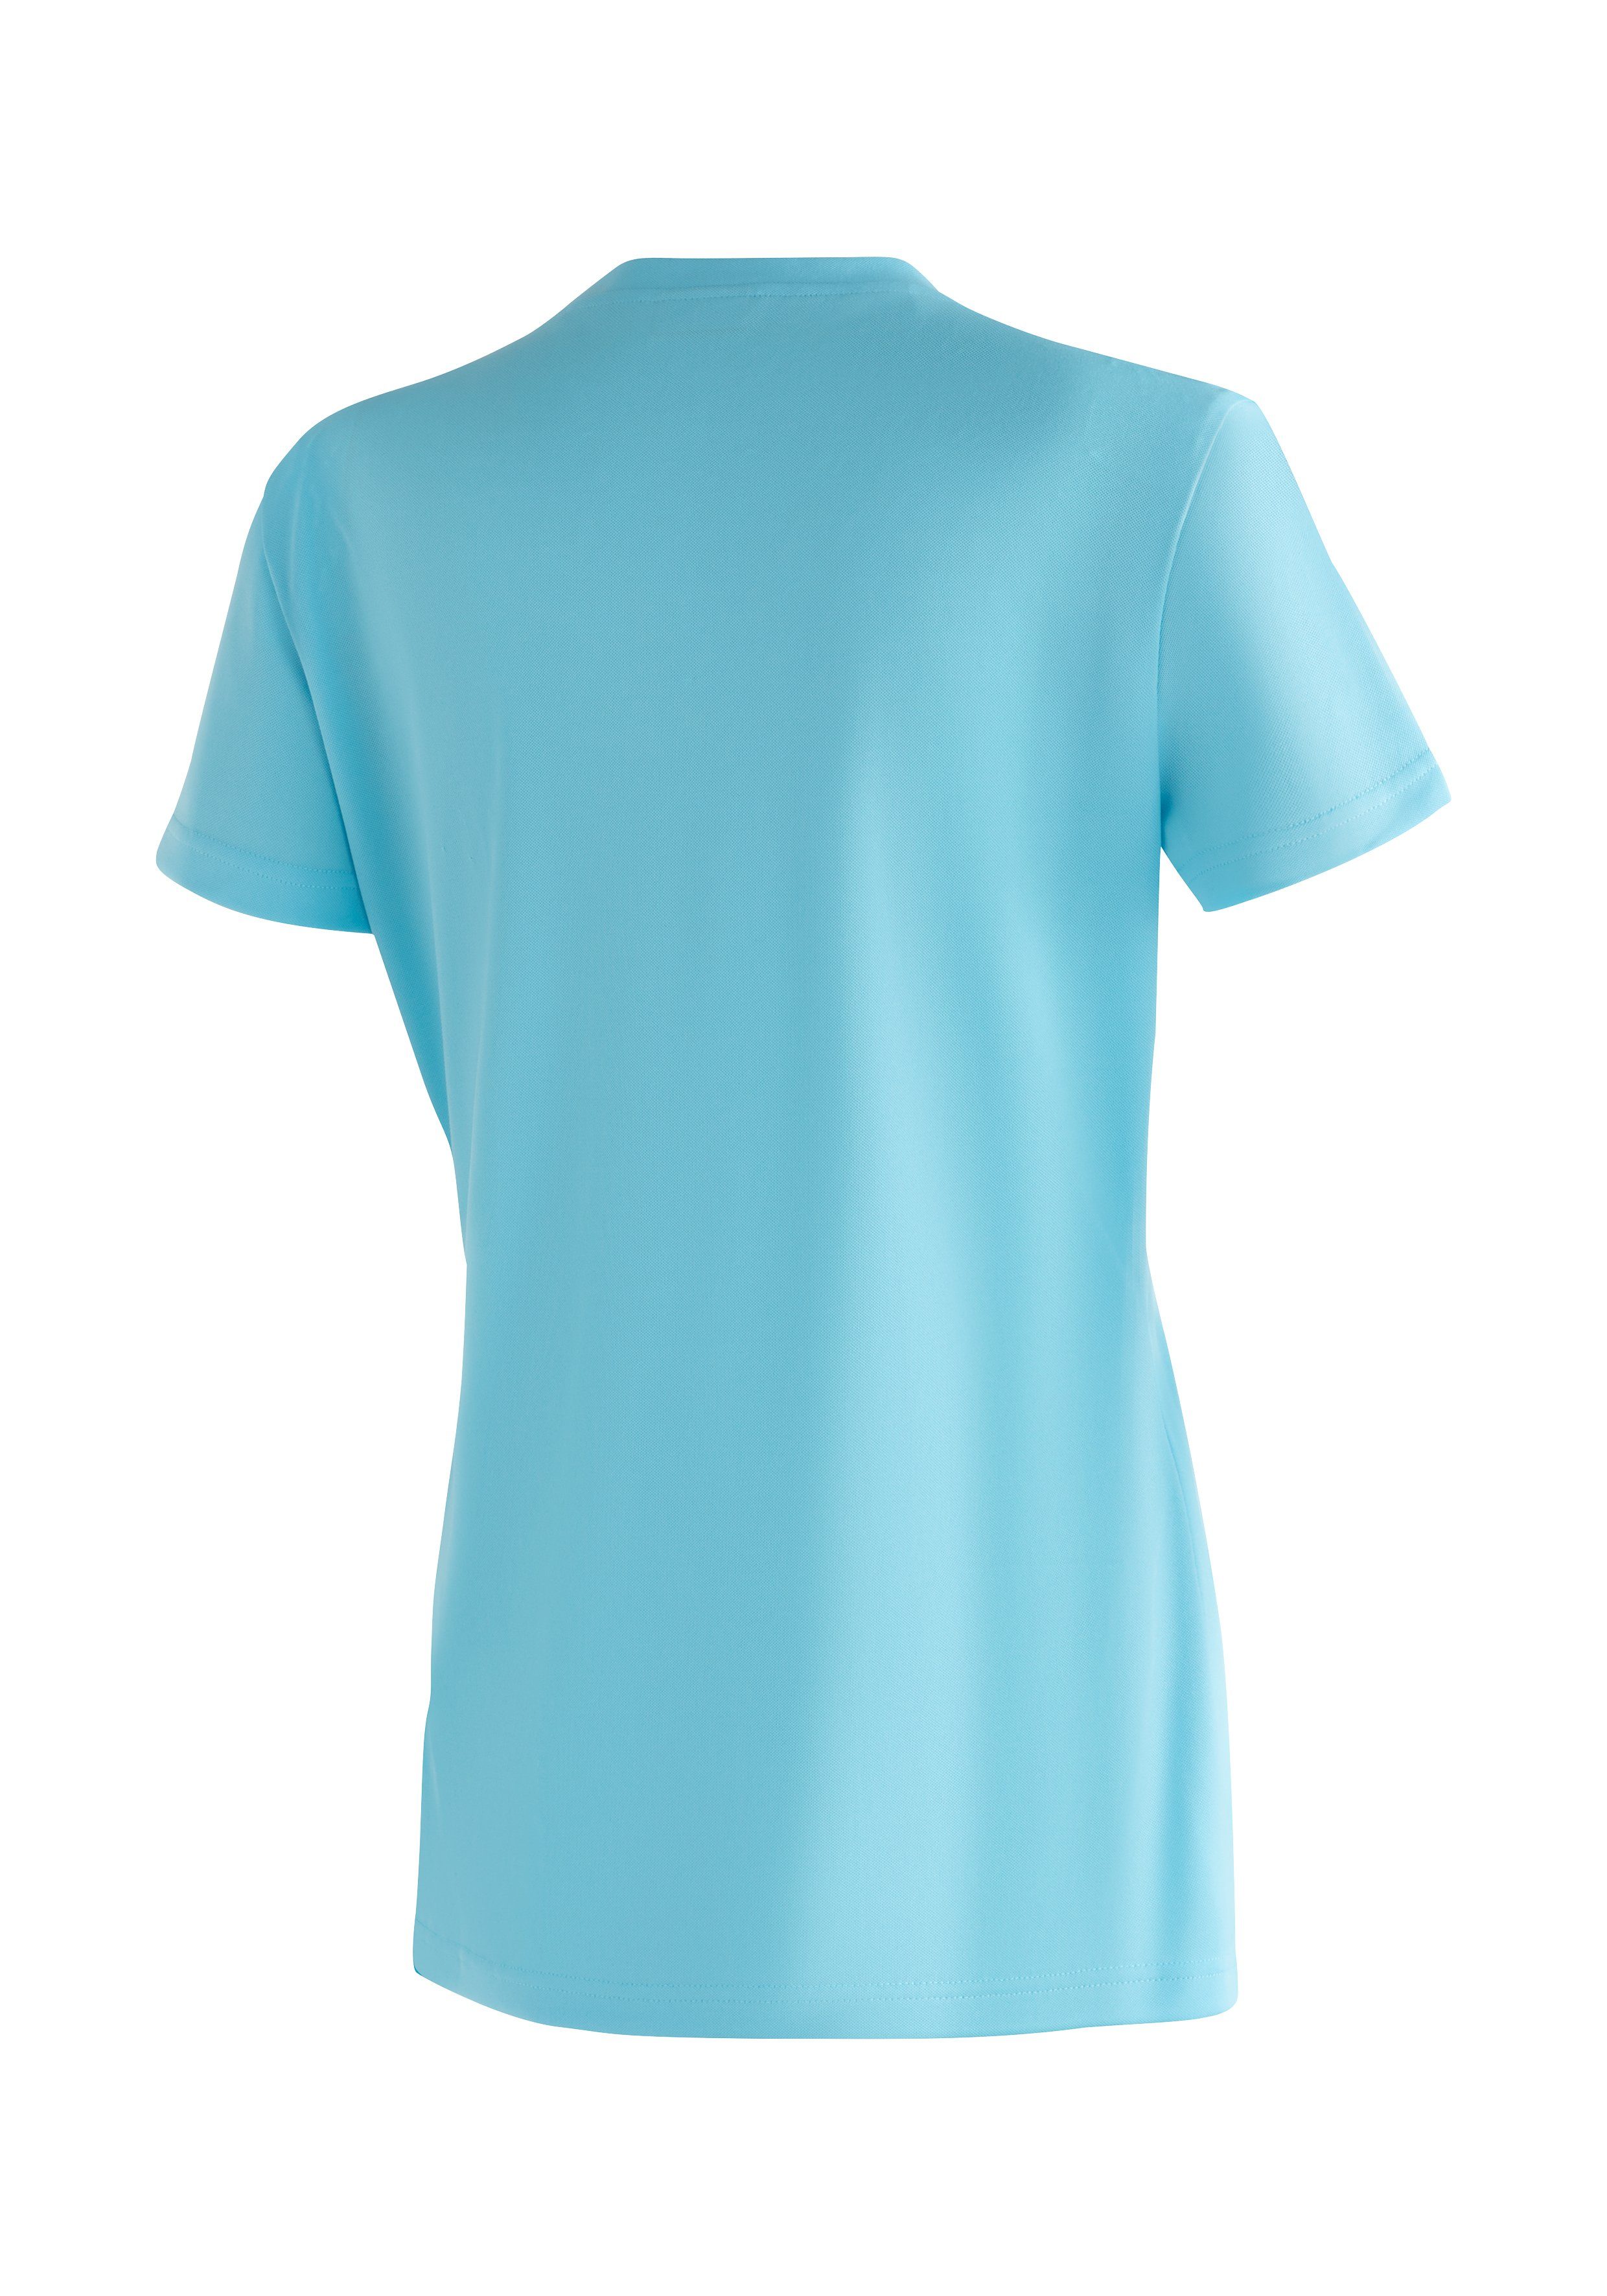 himmelblau Funktionsshirt Maier Sports Waltraut T-Shirt hoher mit Funktional Print vielseitiges Passformstabilität